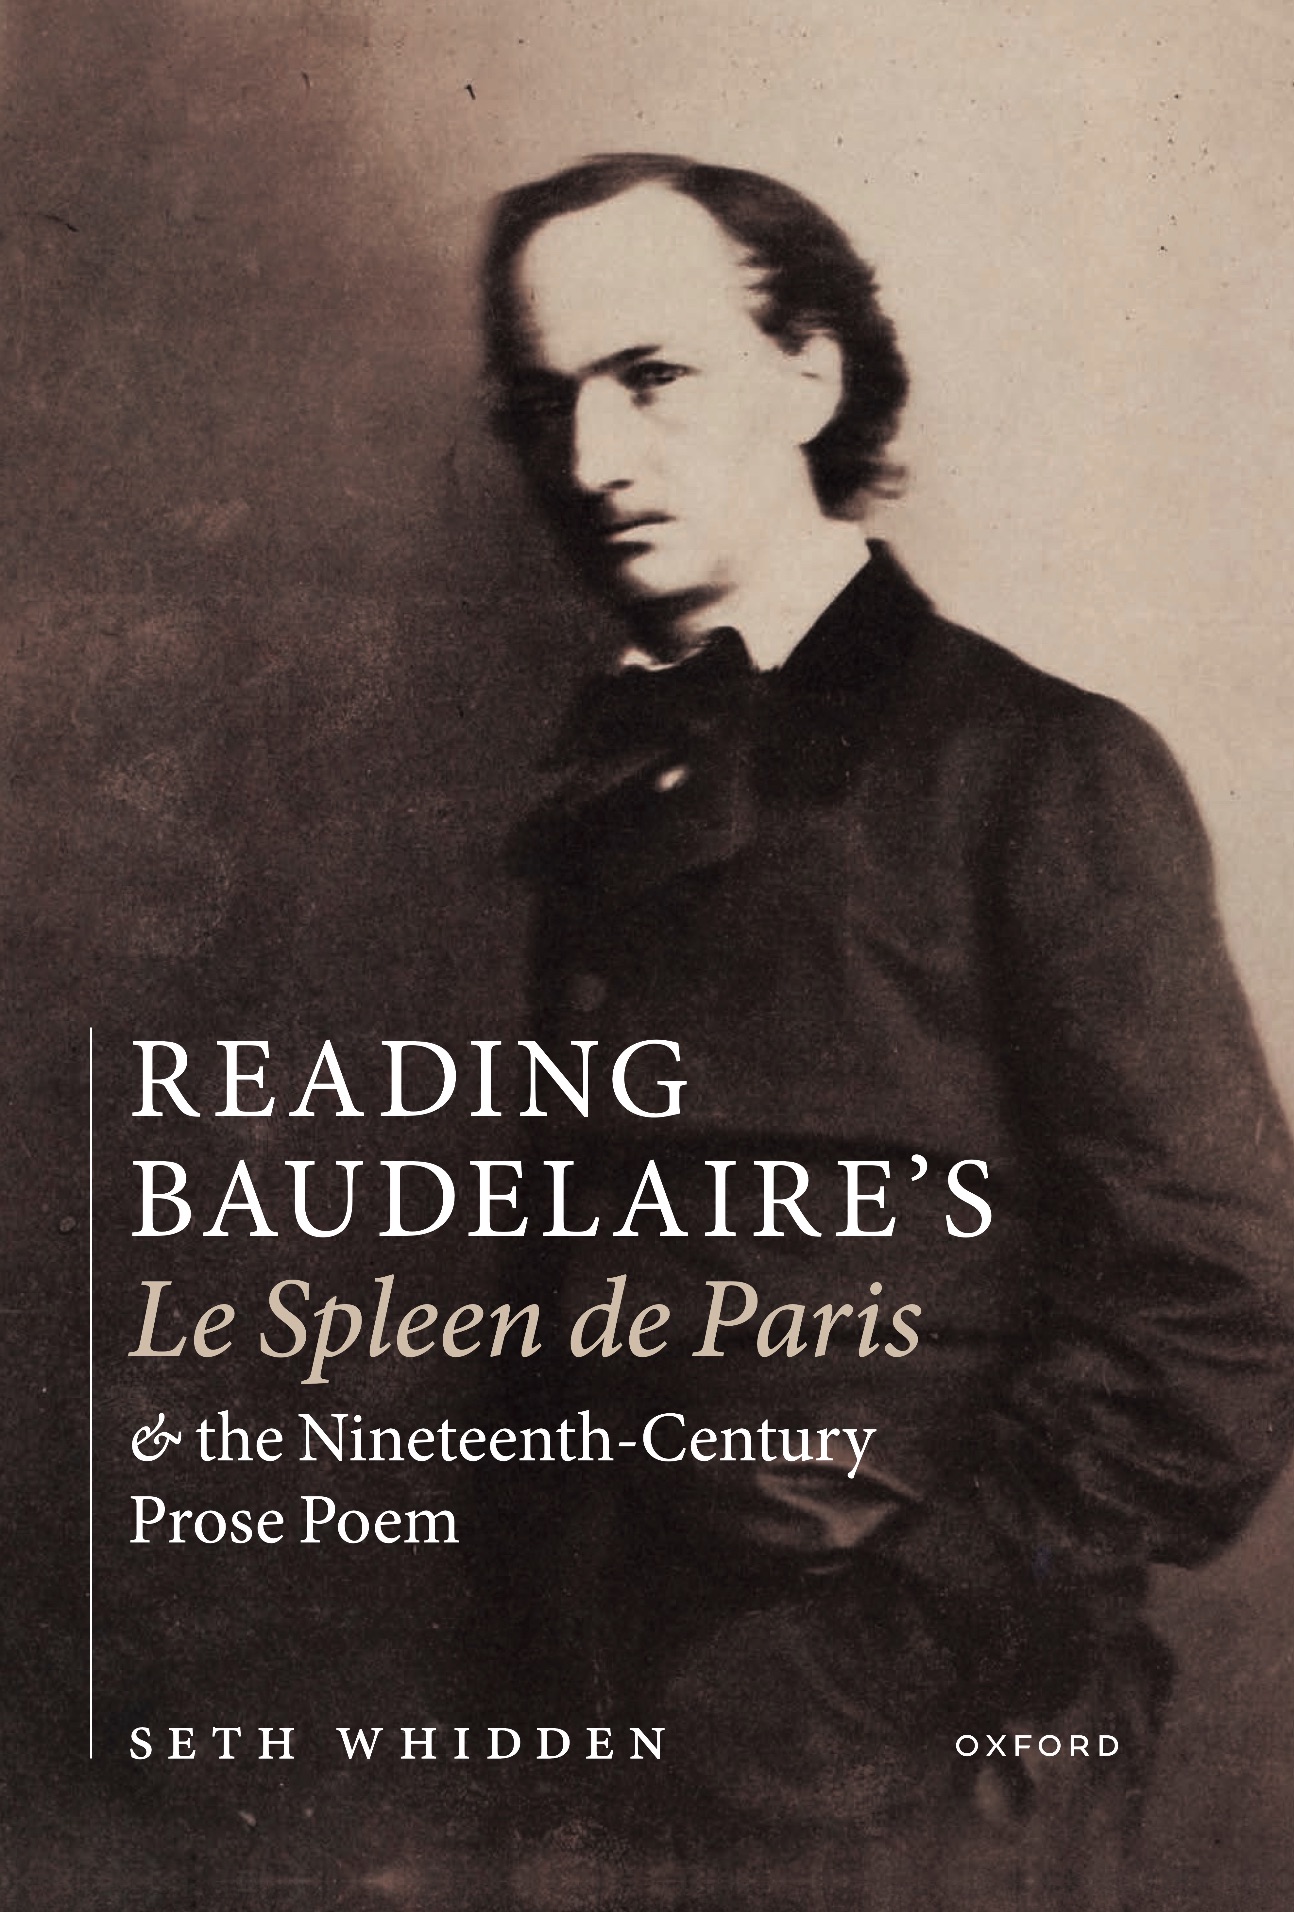 Seth Whidden, Reading Baudelaire's Le Spleen de Paris and the Nineteenth-Century Prose Poem